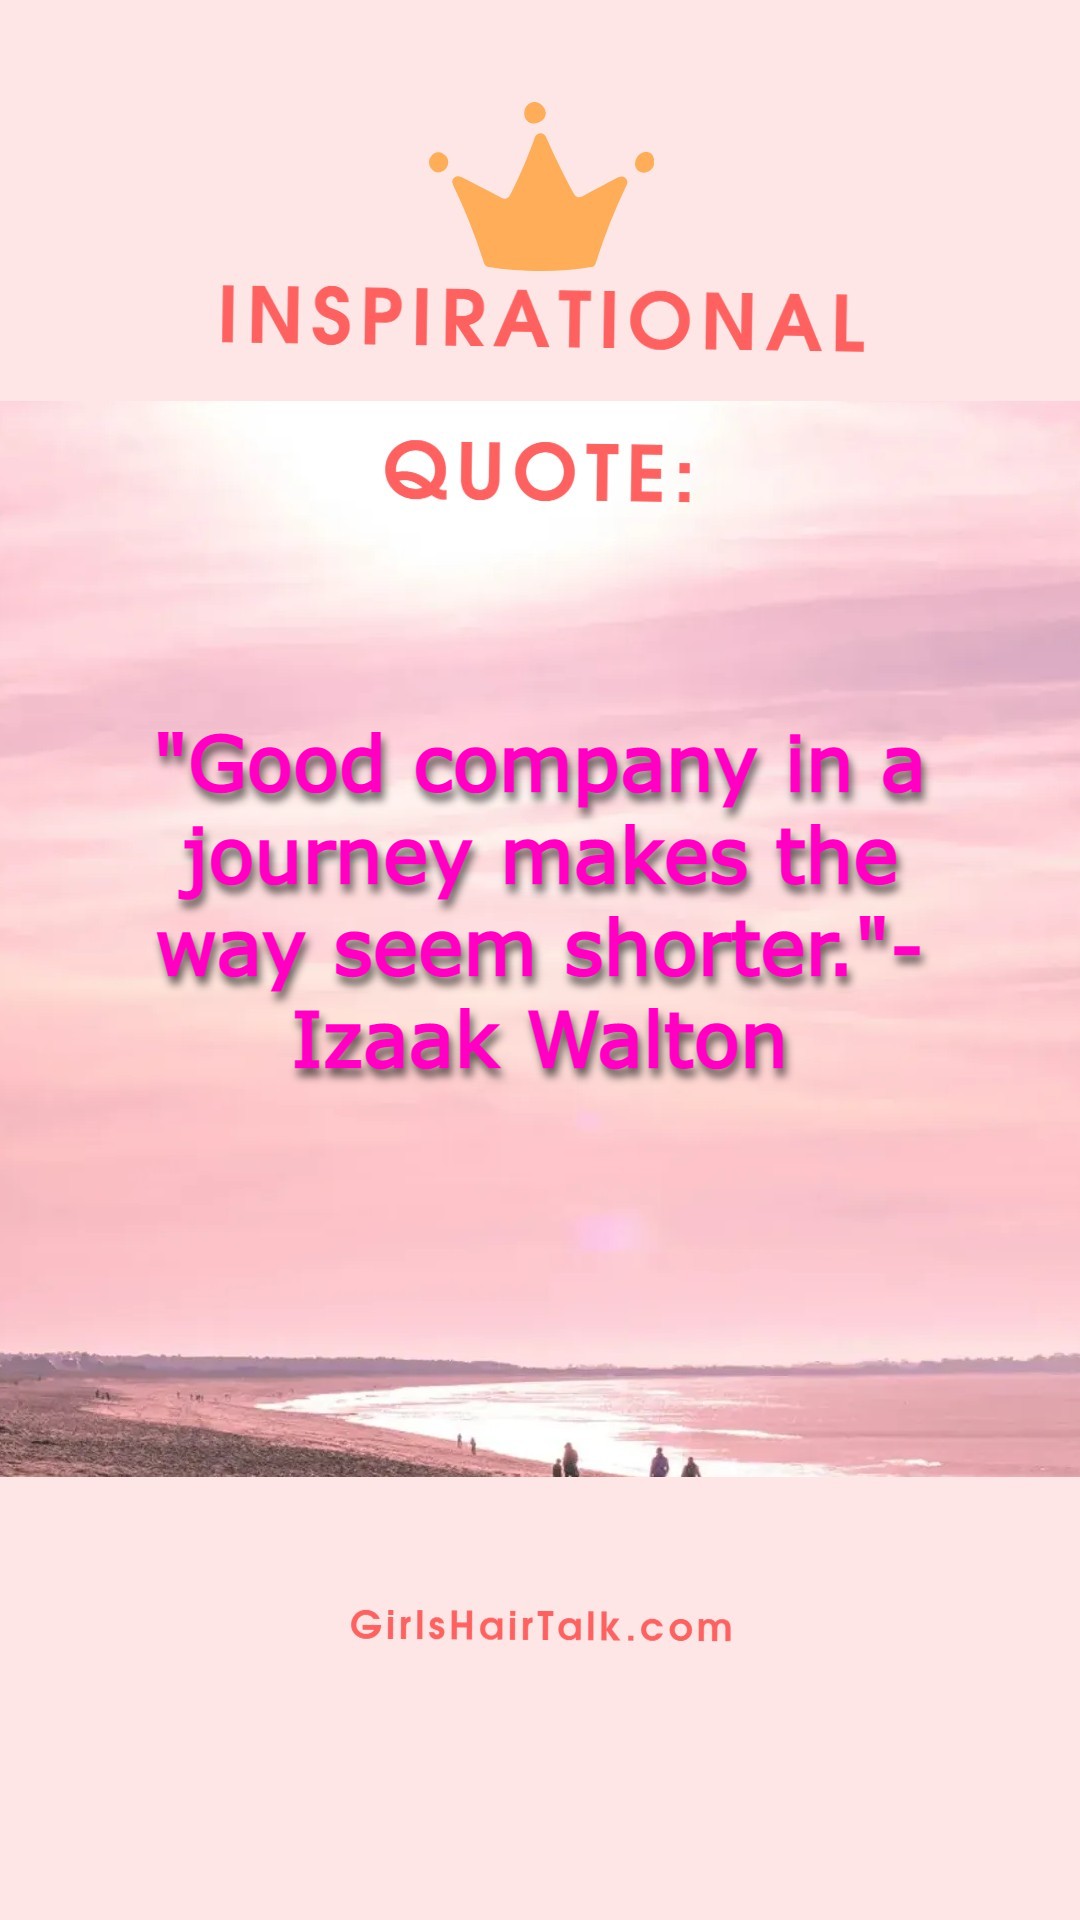 Izaak Walton cancer quote